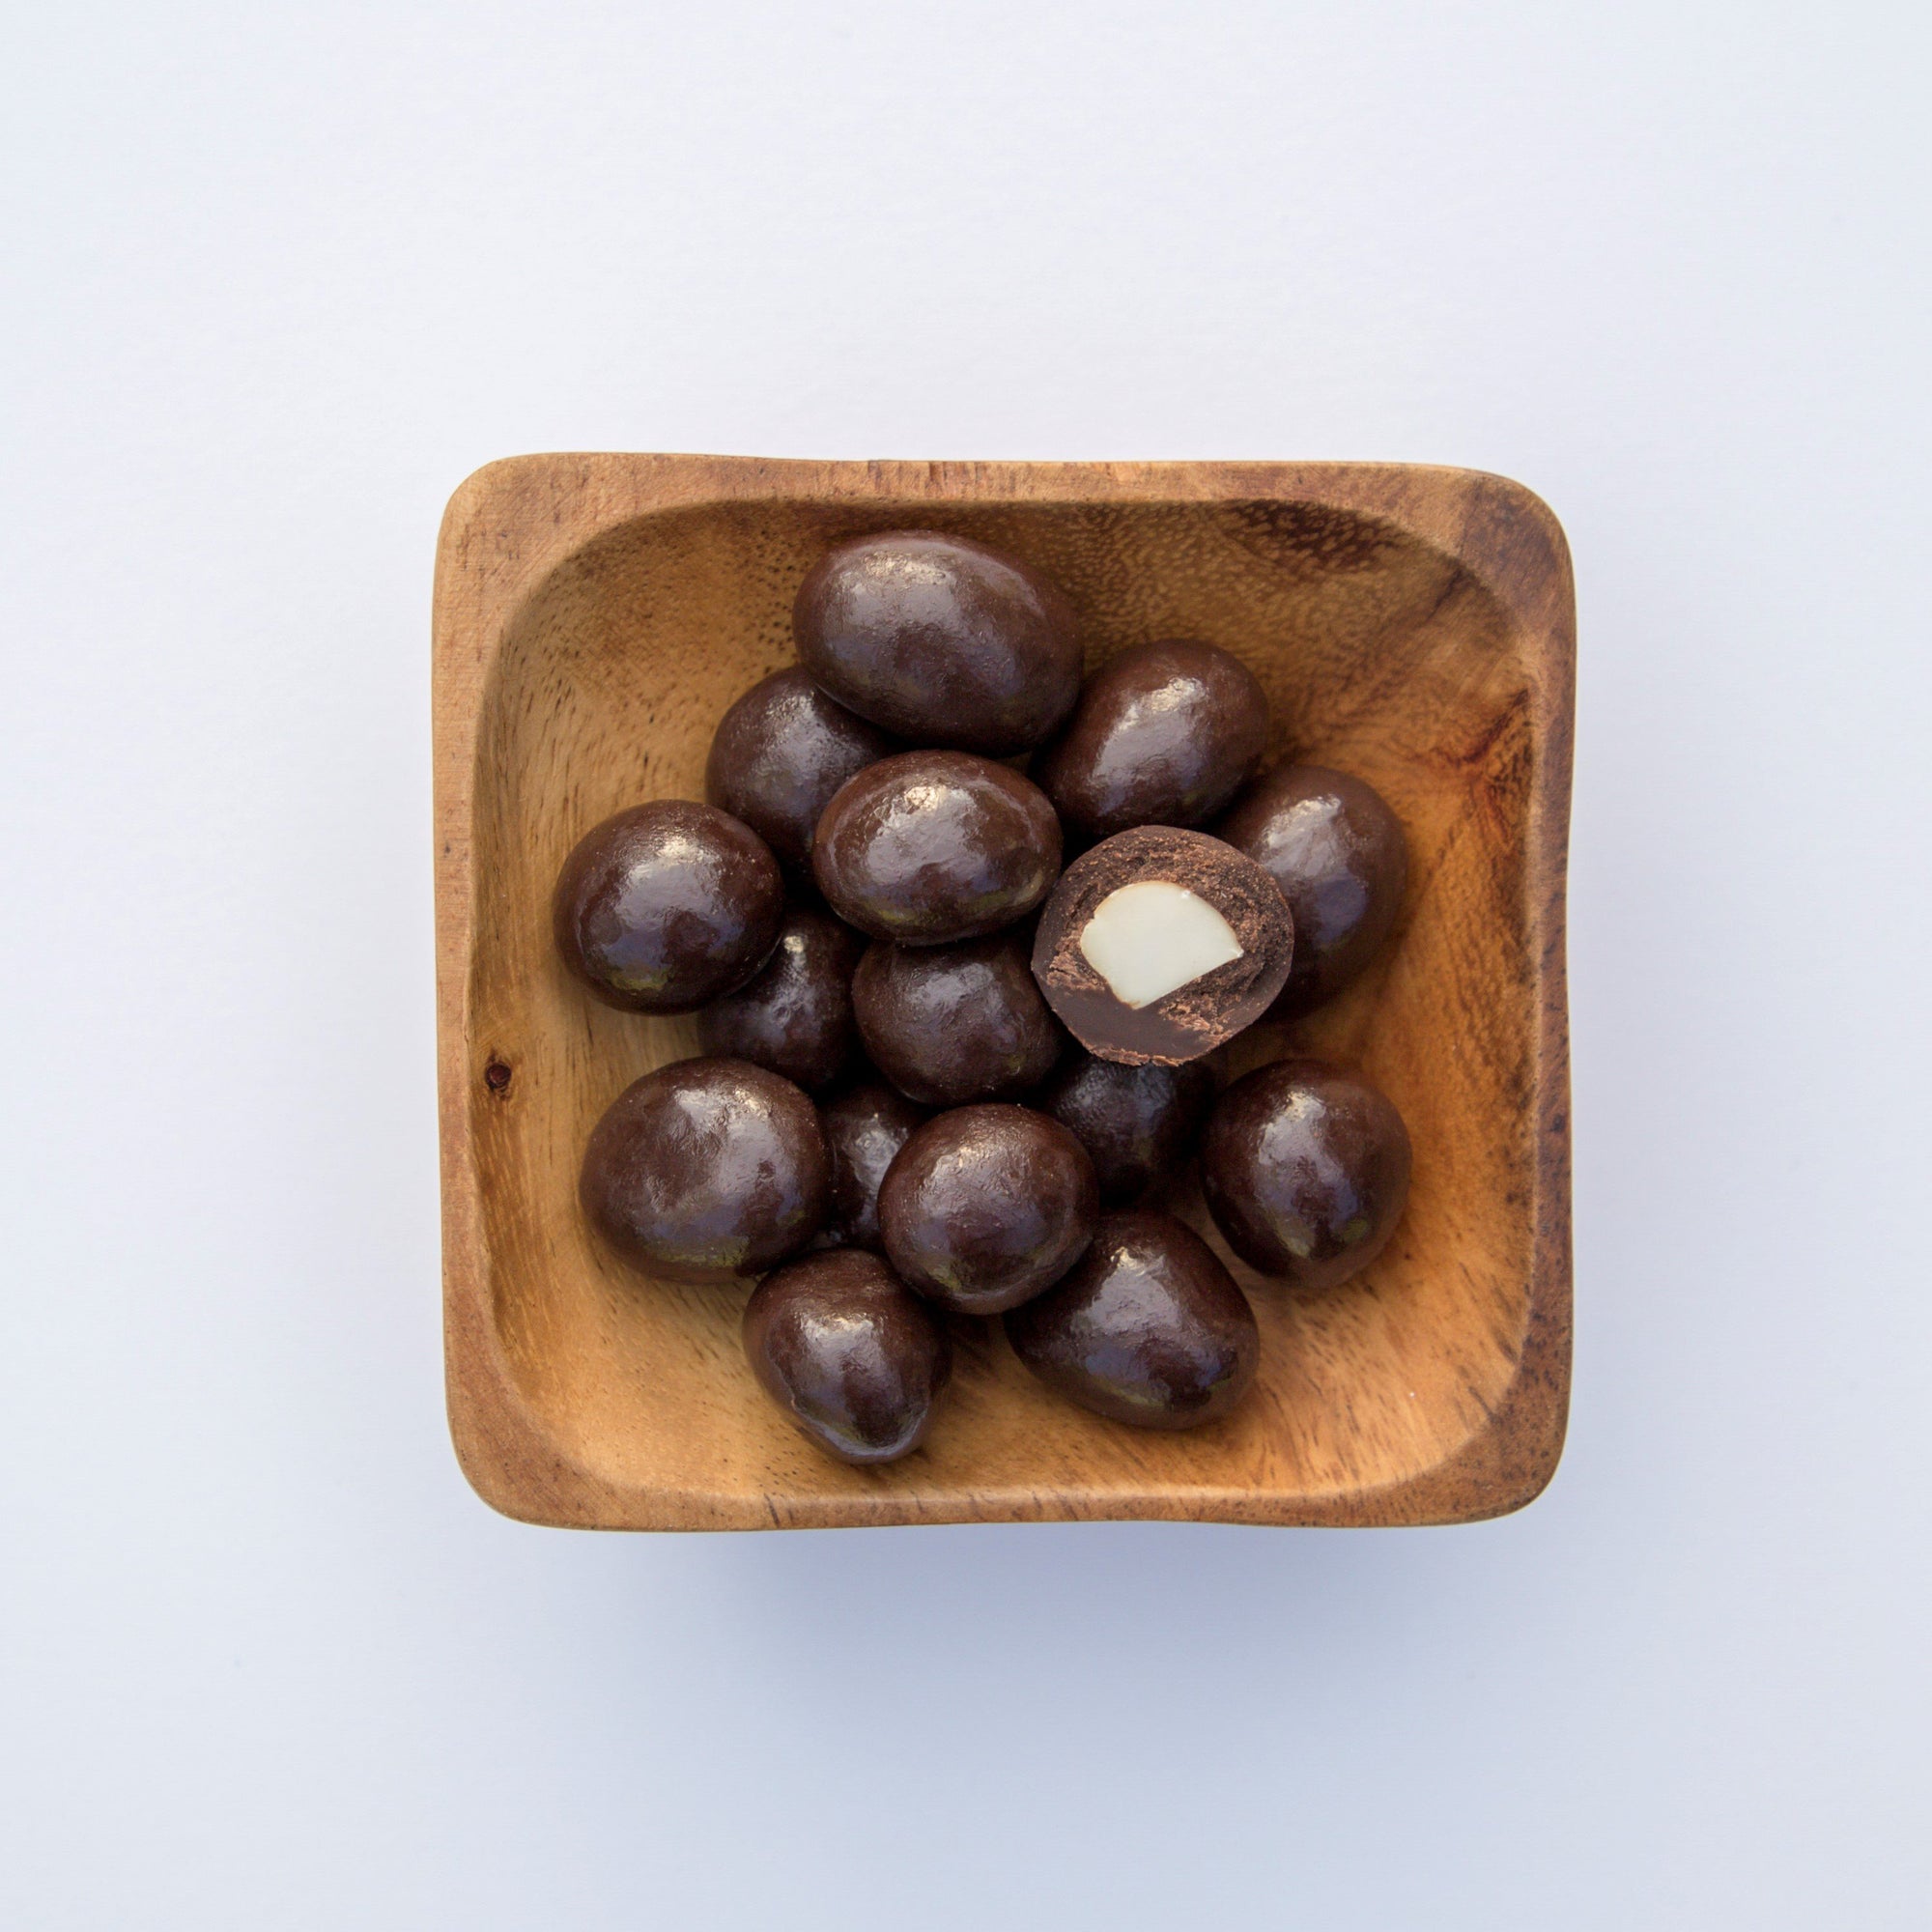 Pop-Up Mākeke - Island Harvest - Organic Macadamia Nuts Covered in Dark Chocolate - In Bowl